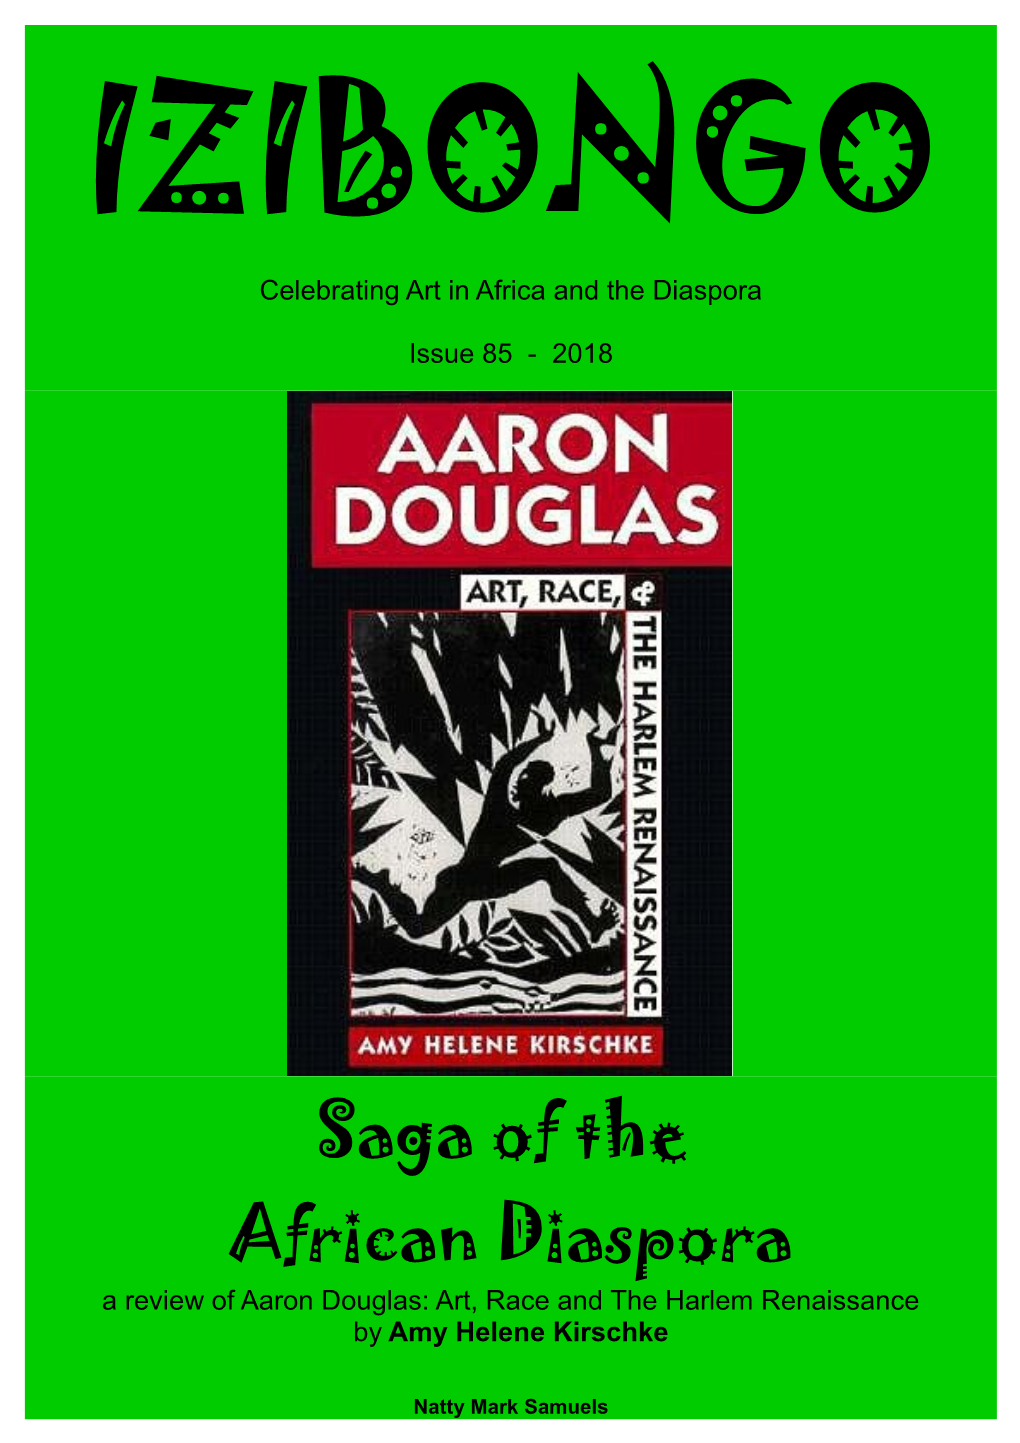 Saga of the African Diaspora a Review of Aaron Douglas: Art, Race and the Harlem Renaissance by Amy Helene Kirschke